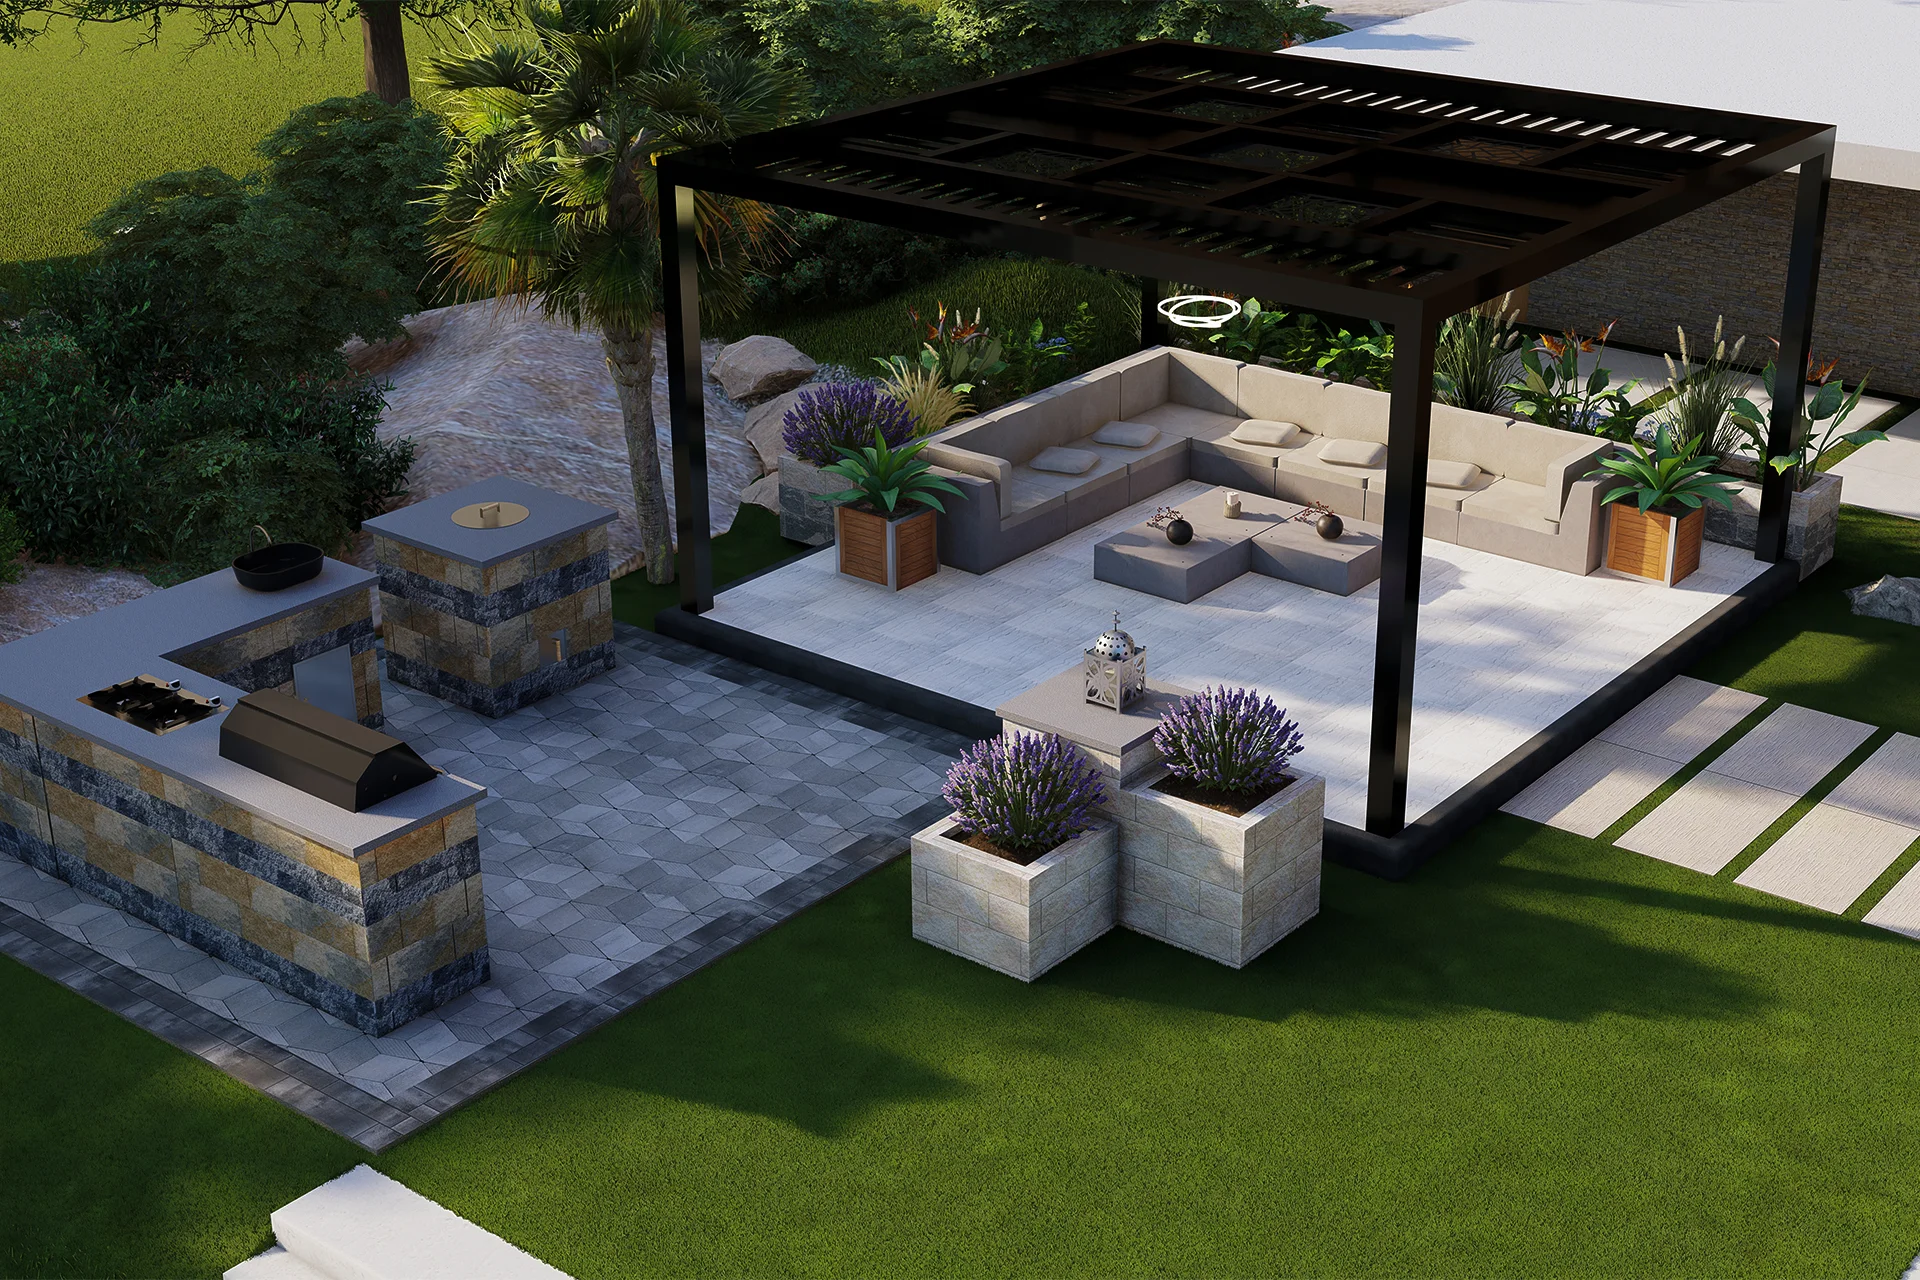 backyard seating area